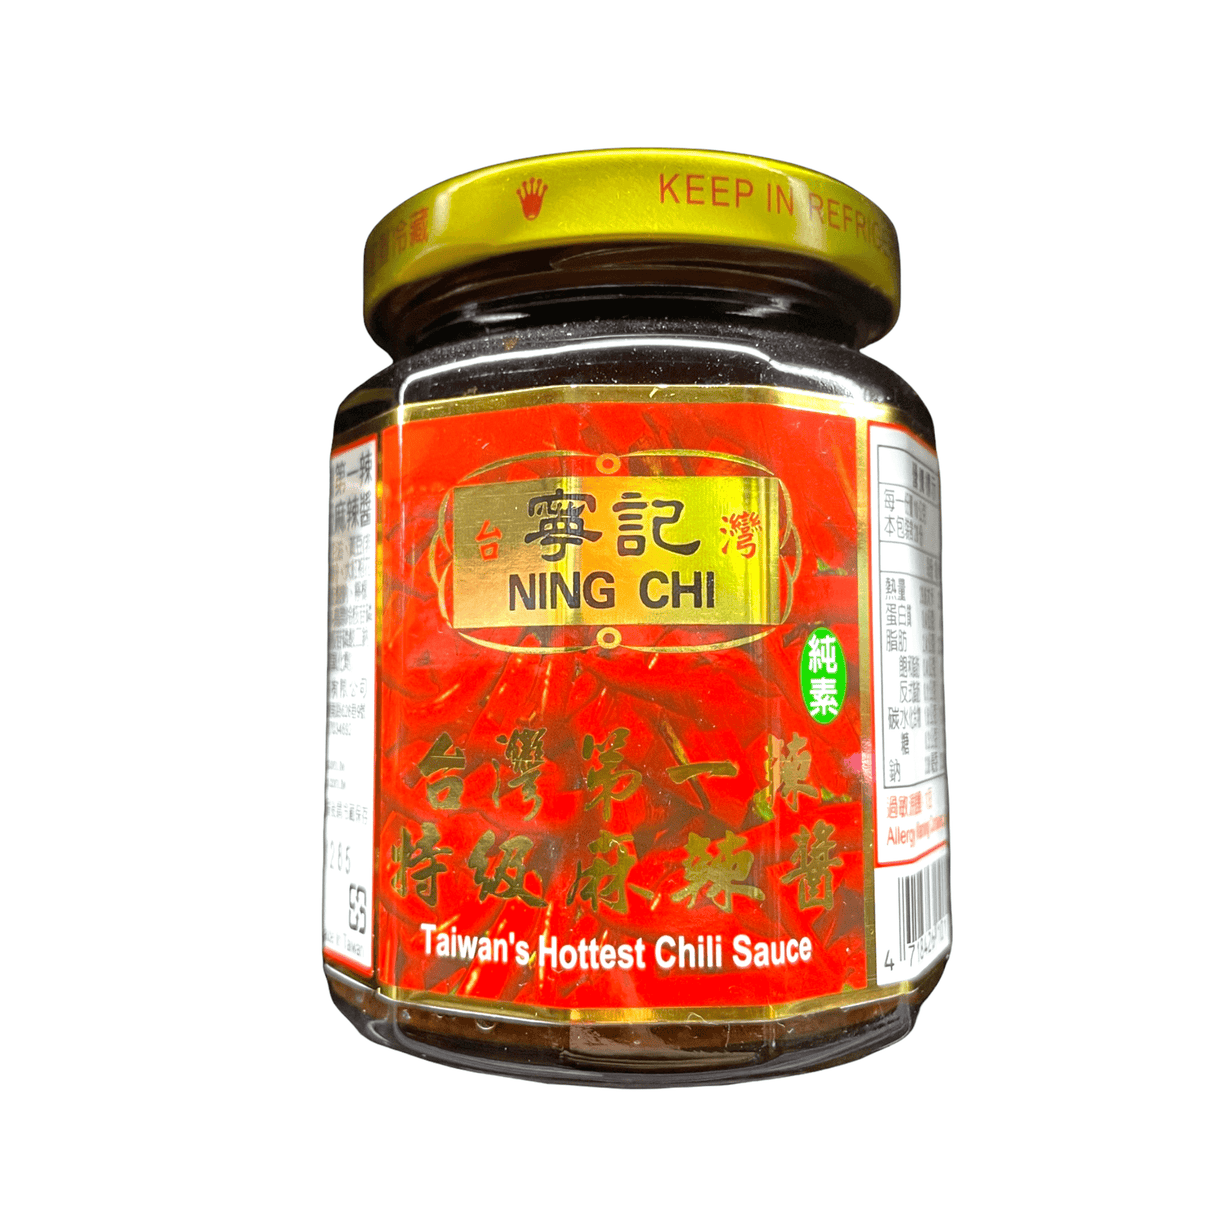 NING CHI Taiwan's Hottest Chili Sauce